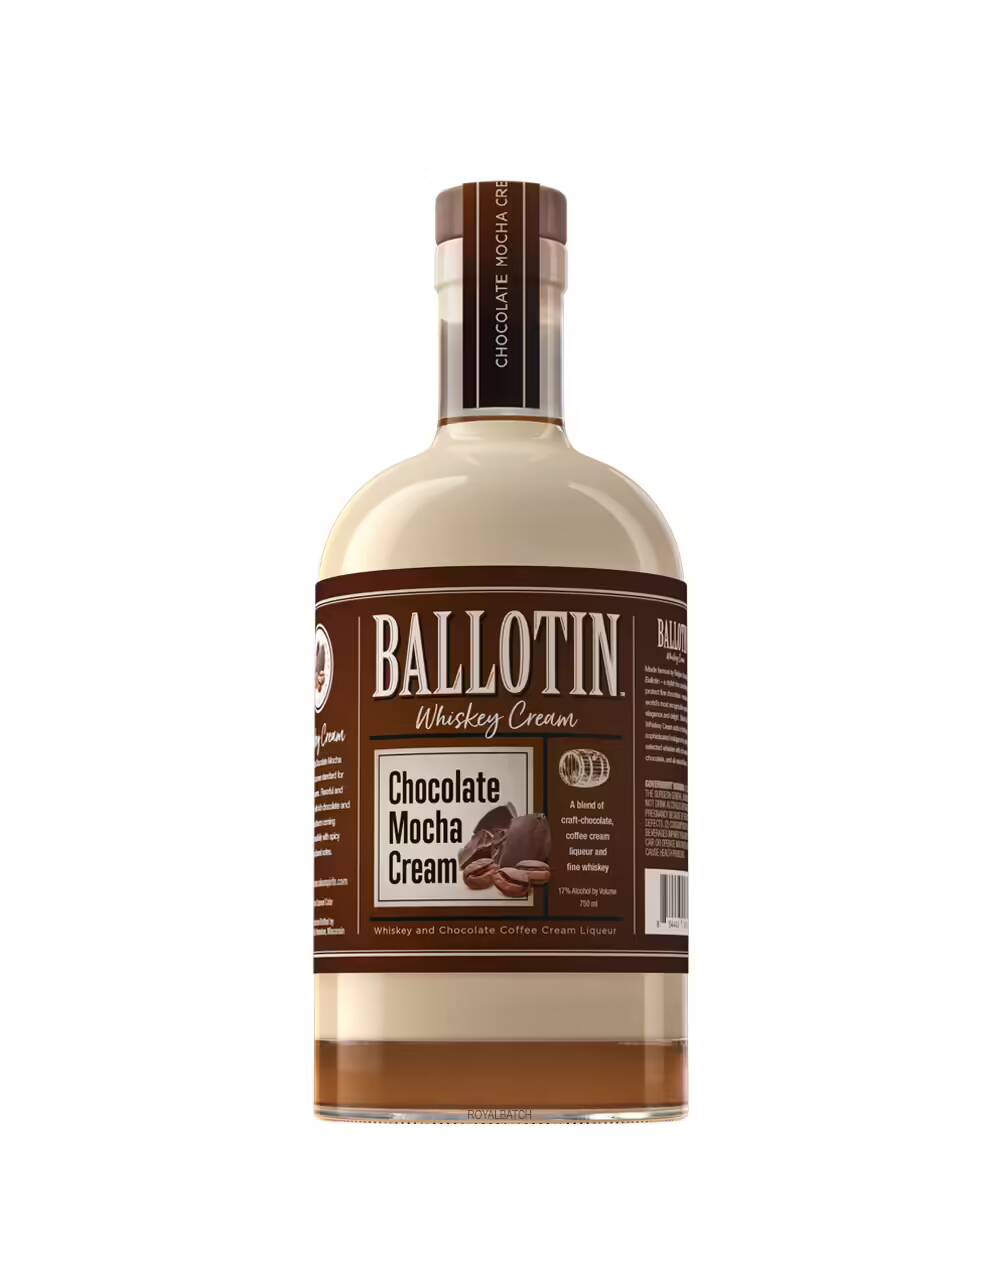 Ballotin Chocolate Mocha Cream Flavored Whiskey